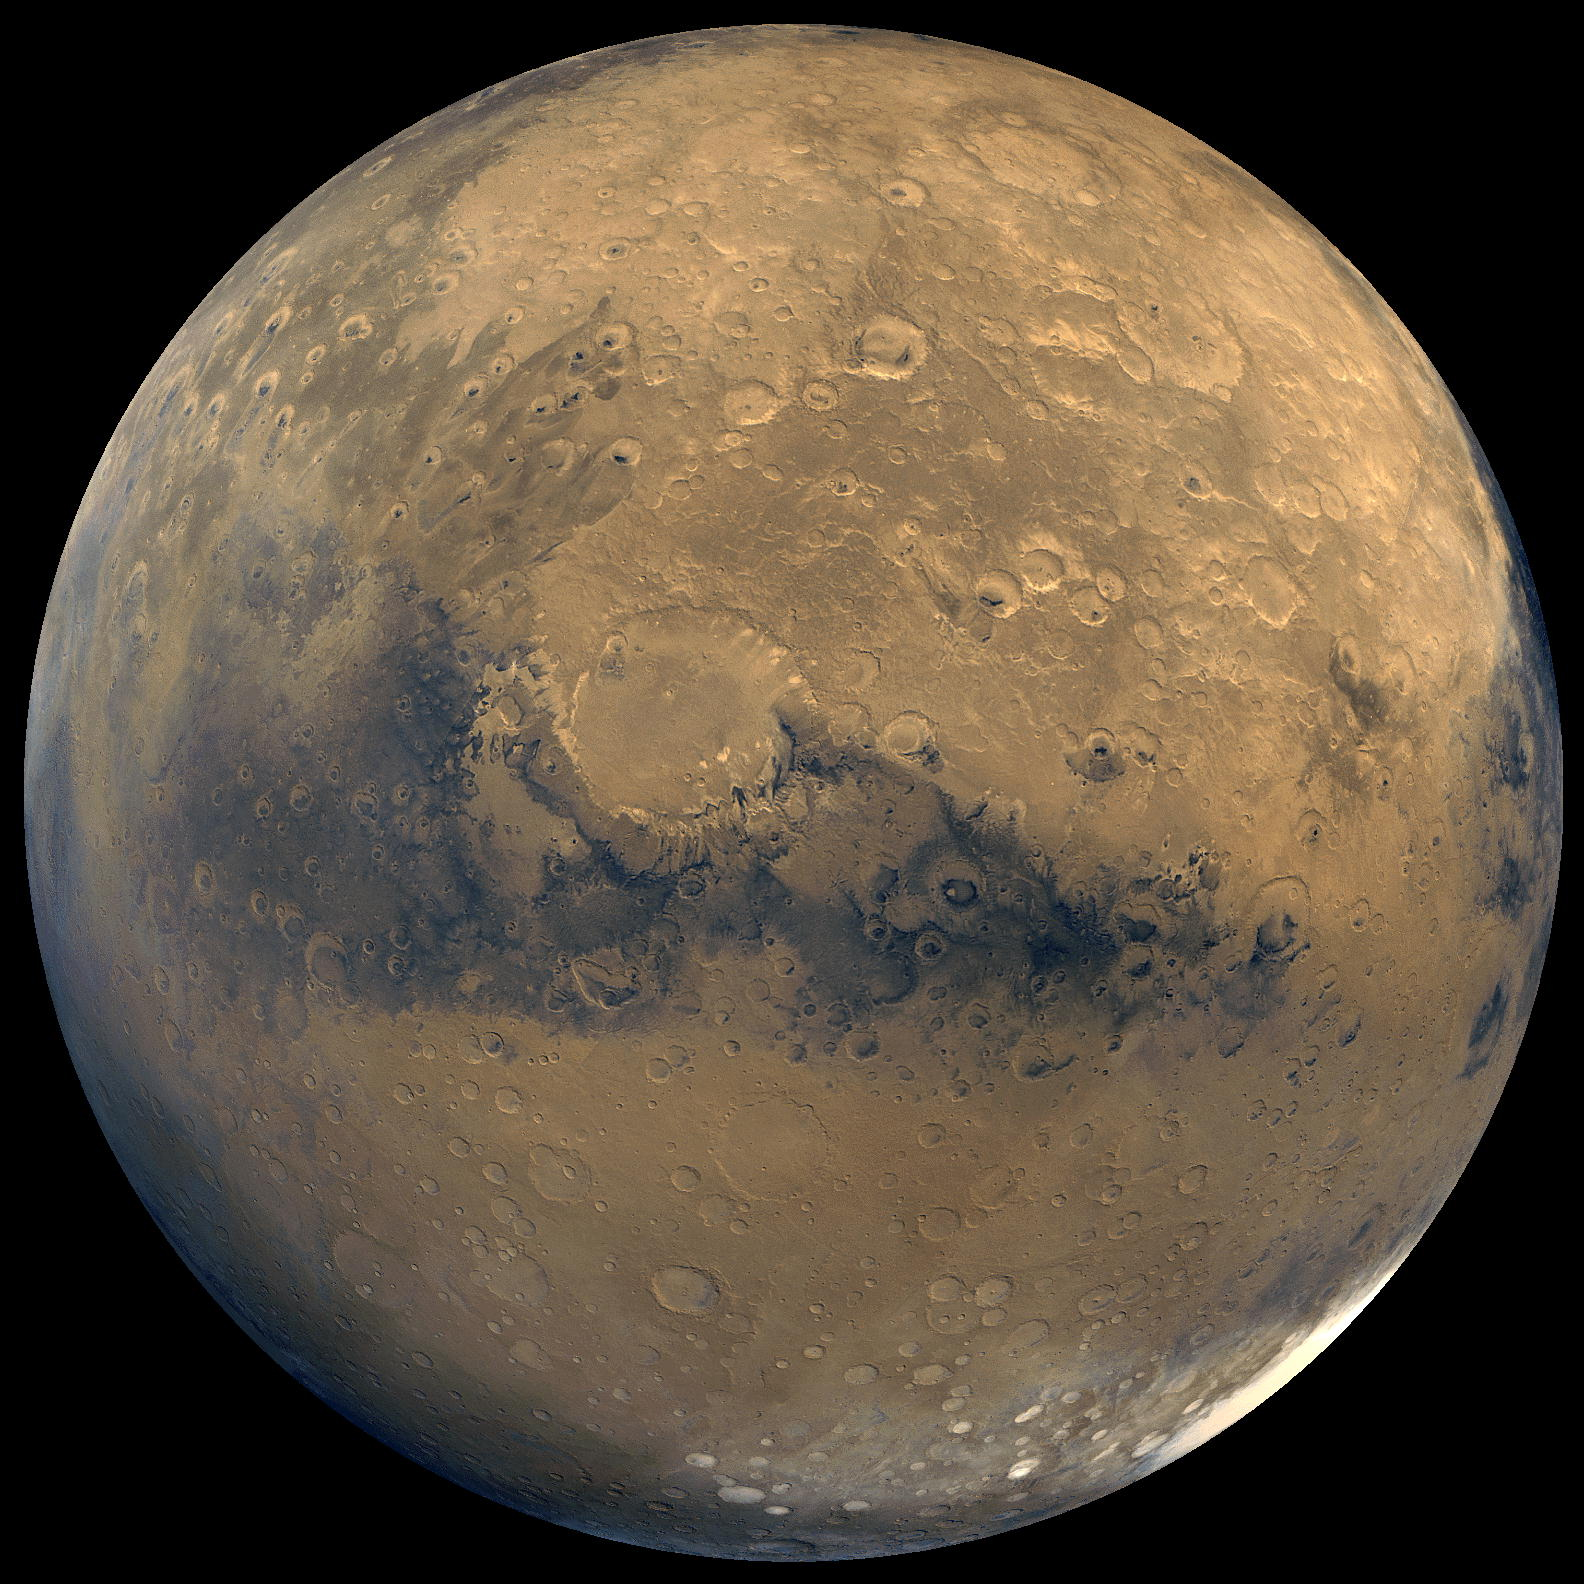 Science Mars Exploration Program